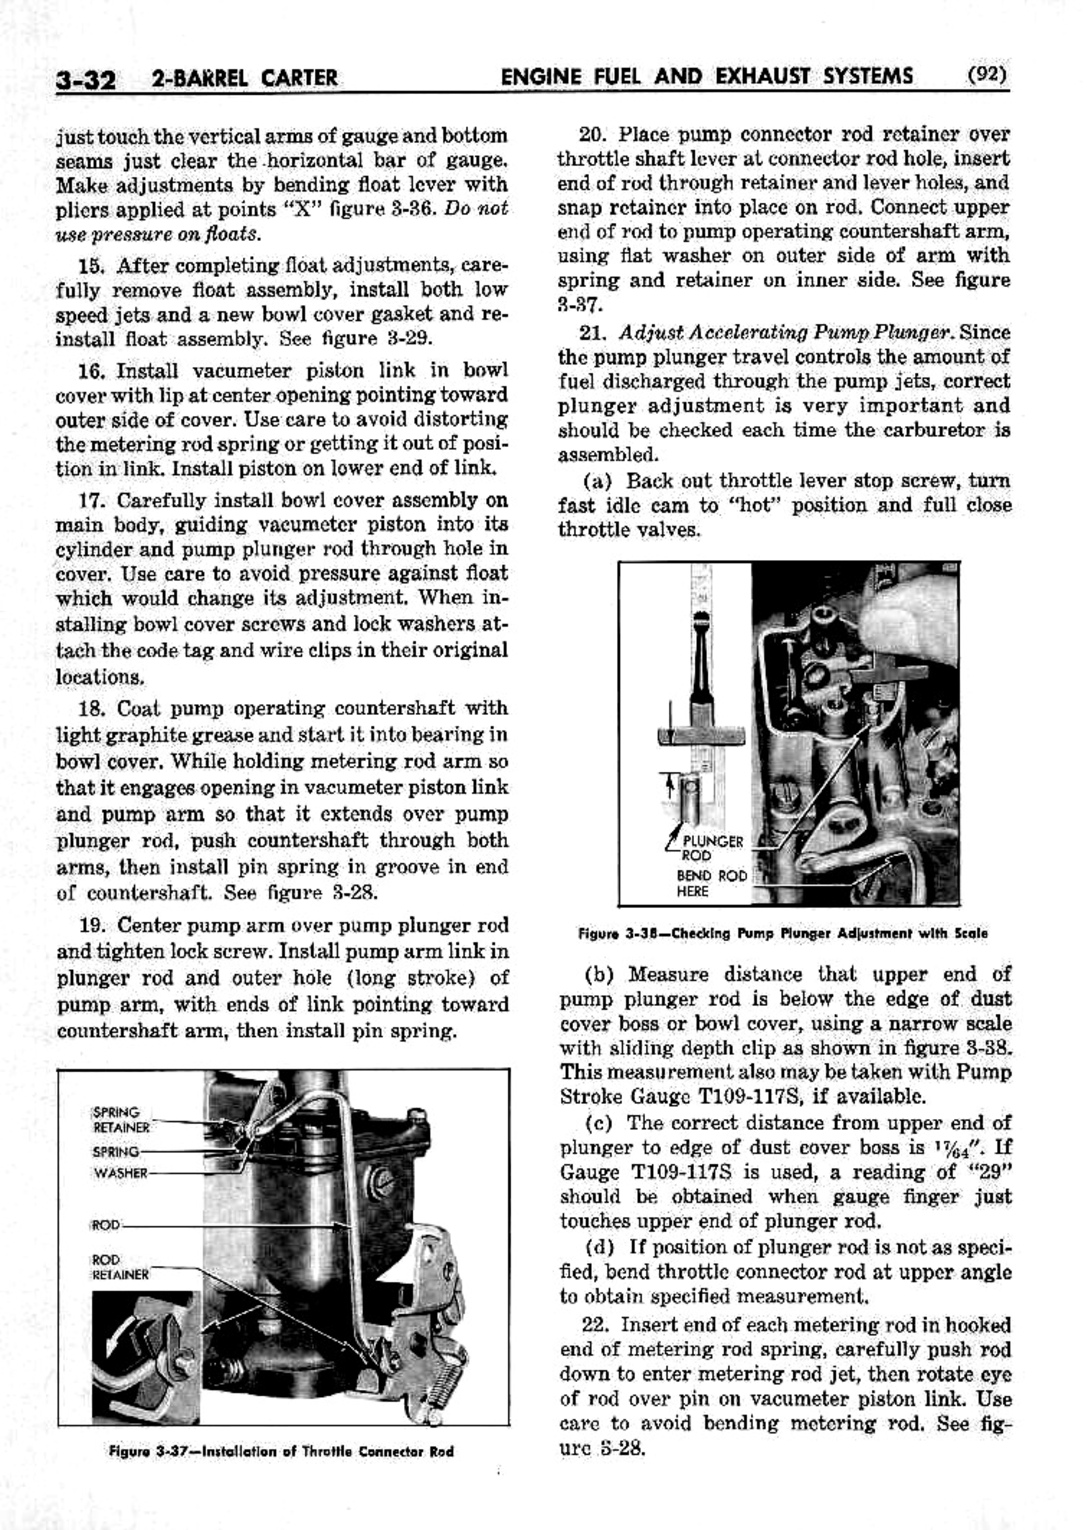 n_04 1953 Buick Shop Manual - Engine Fuel & Exhaust-032-032.jpg